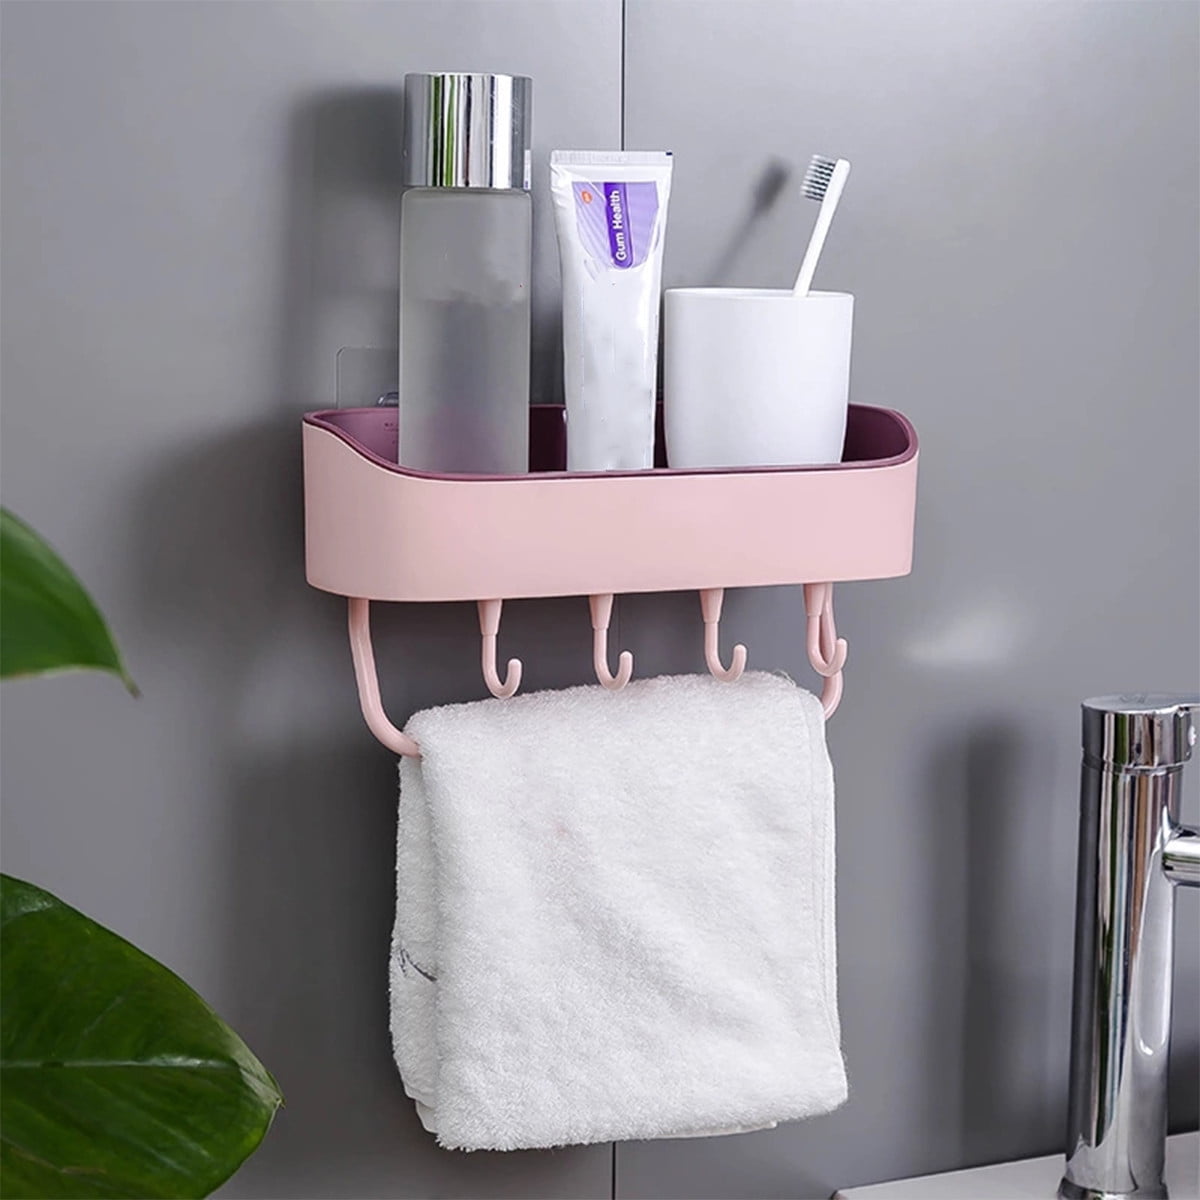 Details about   Aluminum Bathroom Shower Caddy Shelf Wall-mounted Rack Organizer Towel 